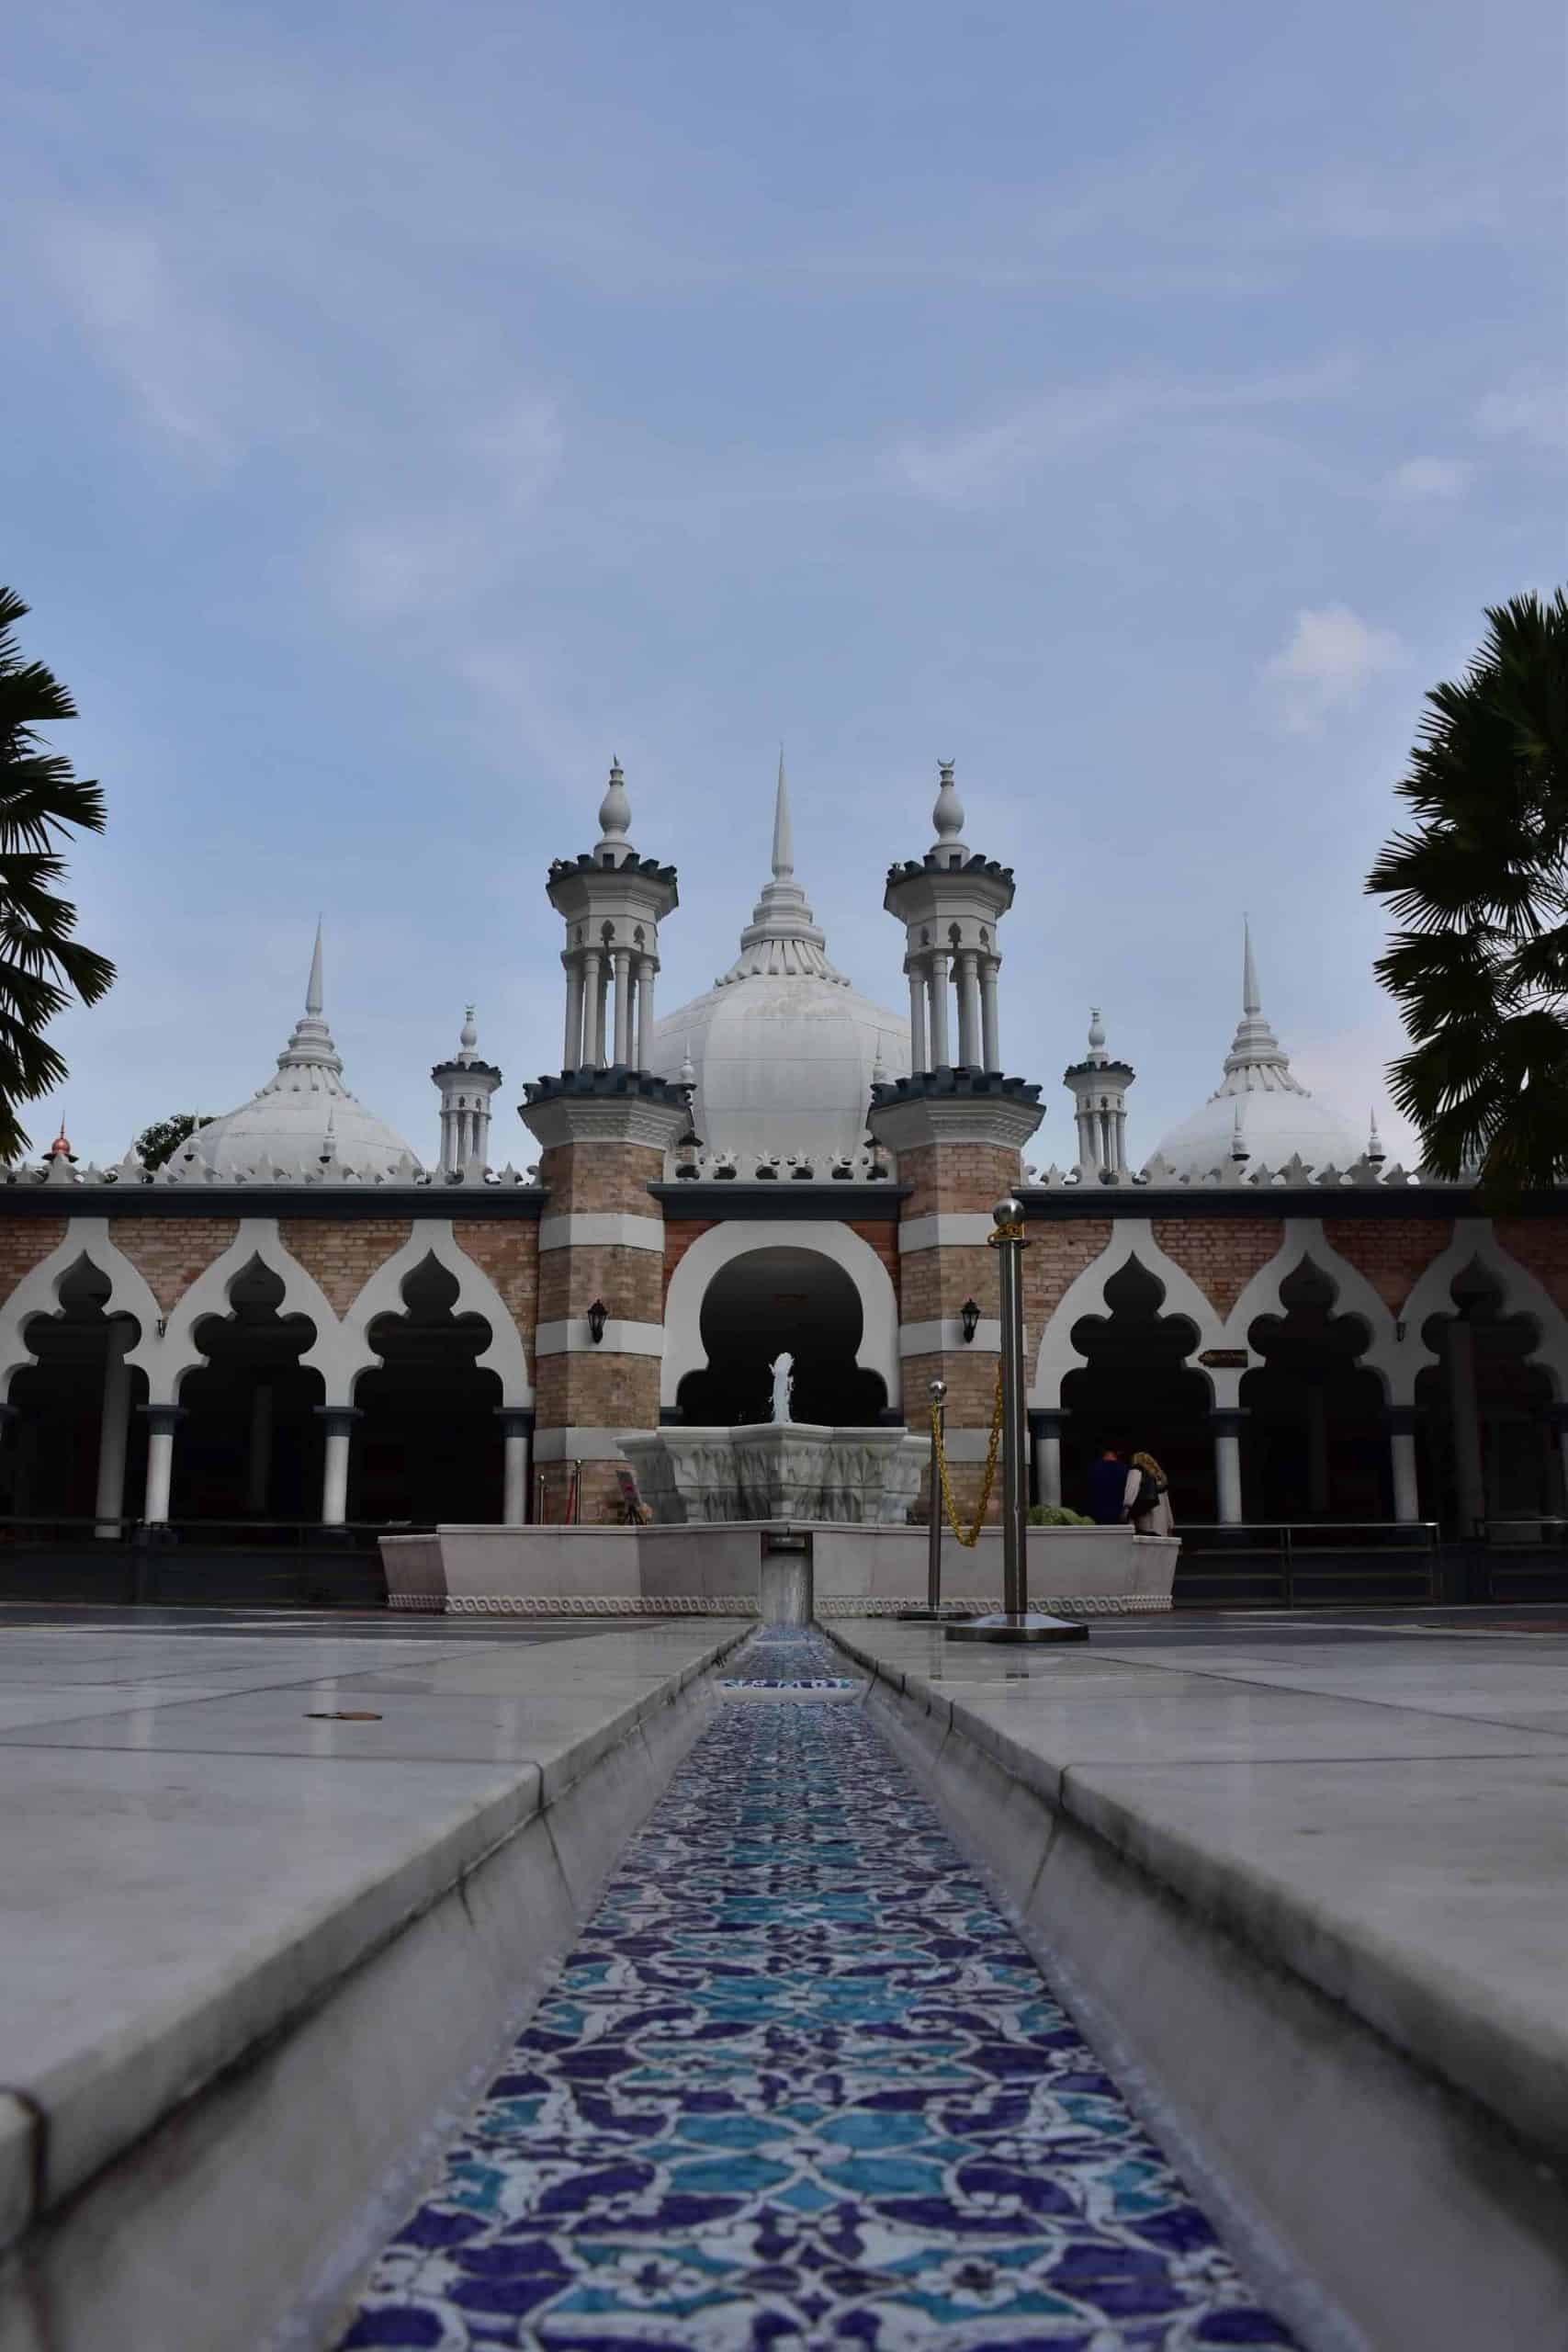 kualalumpur_essential_mosque_architecture-4457989